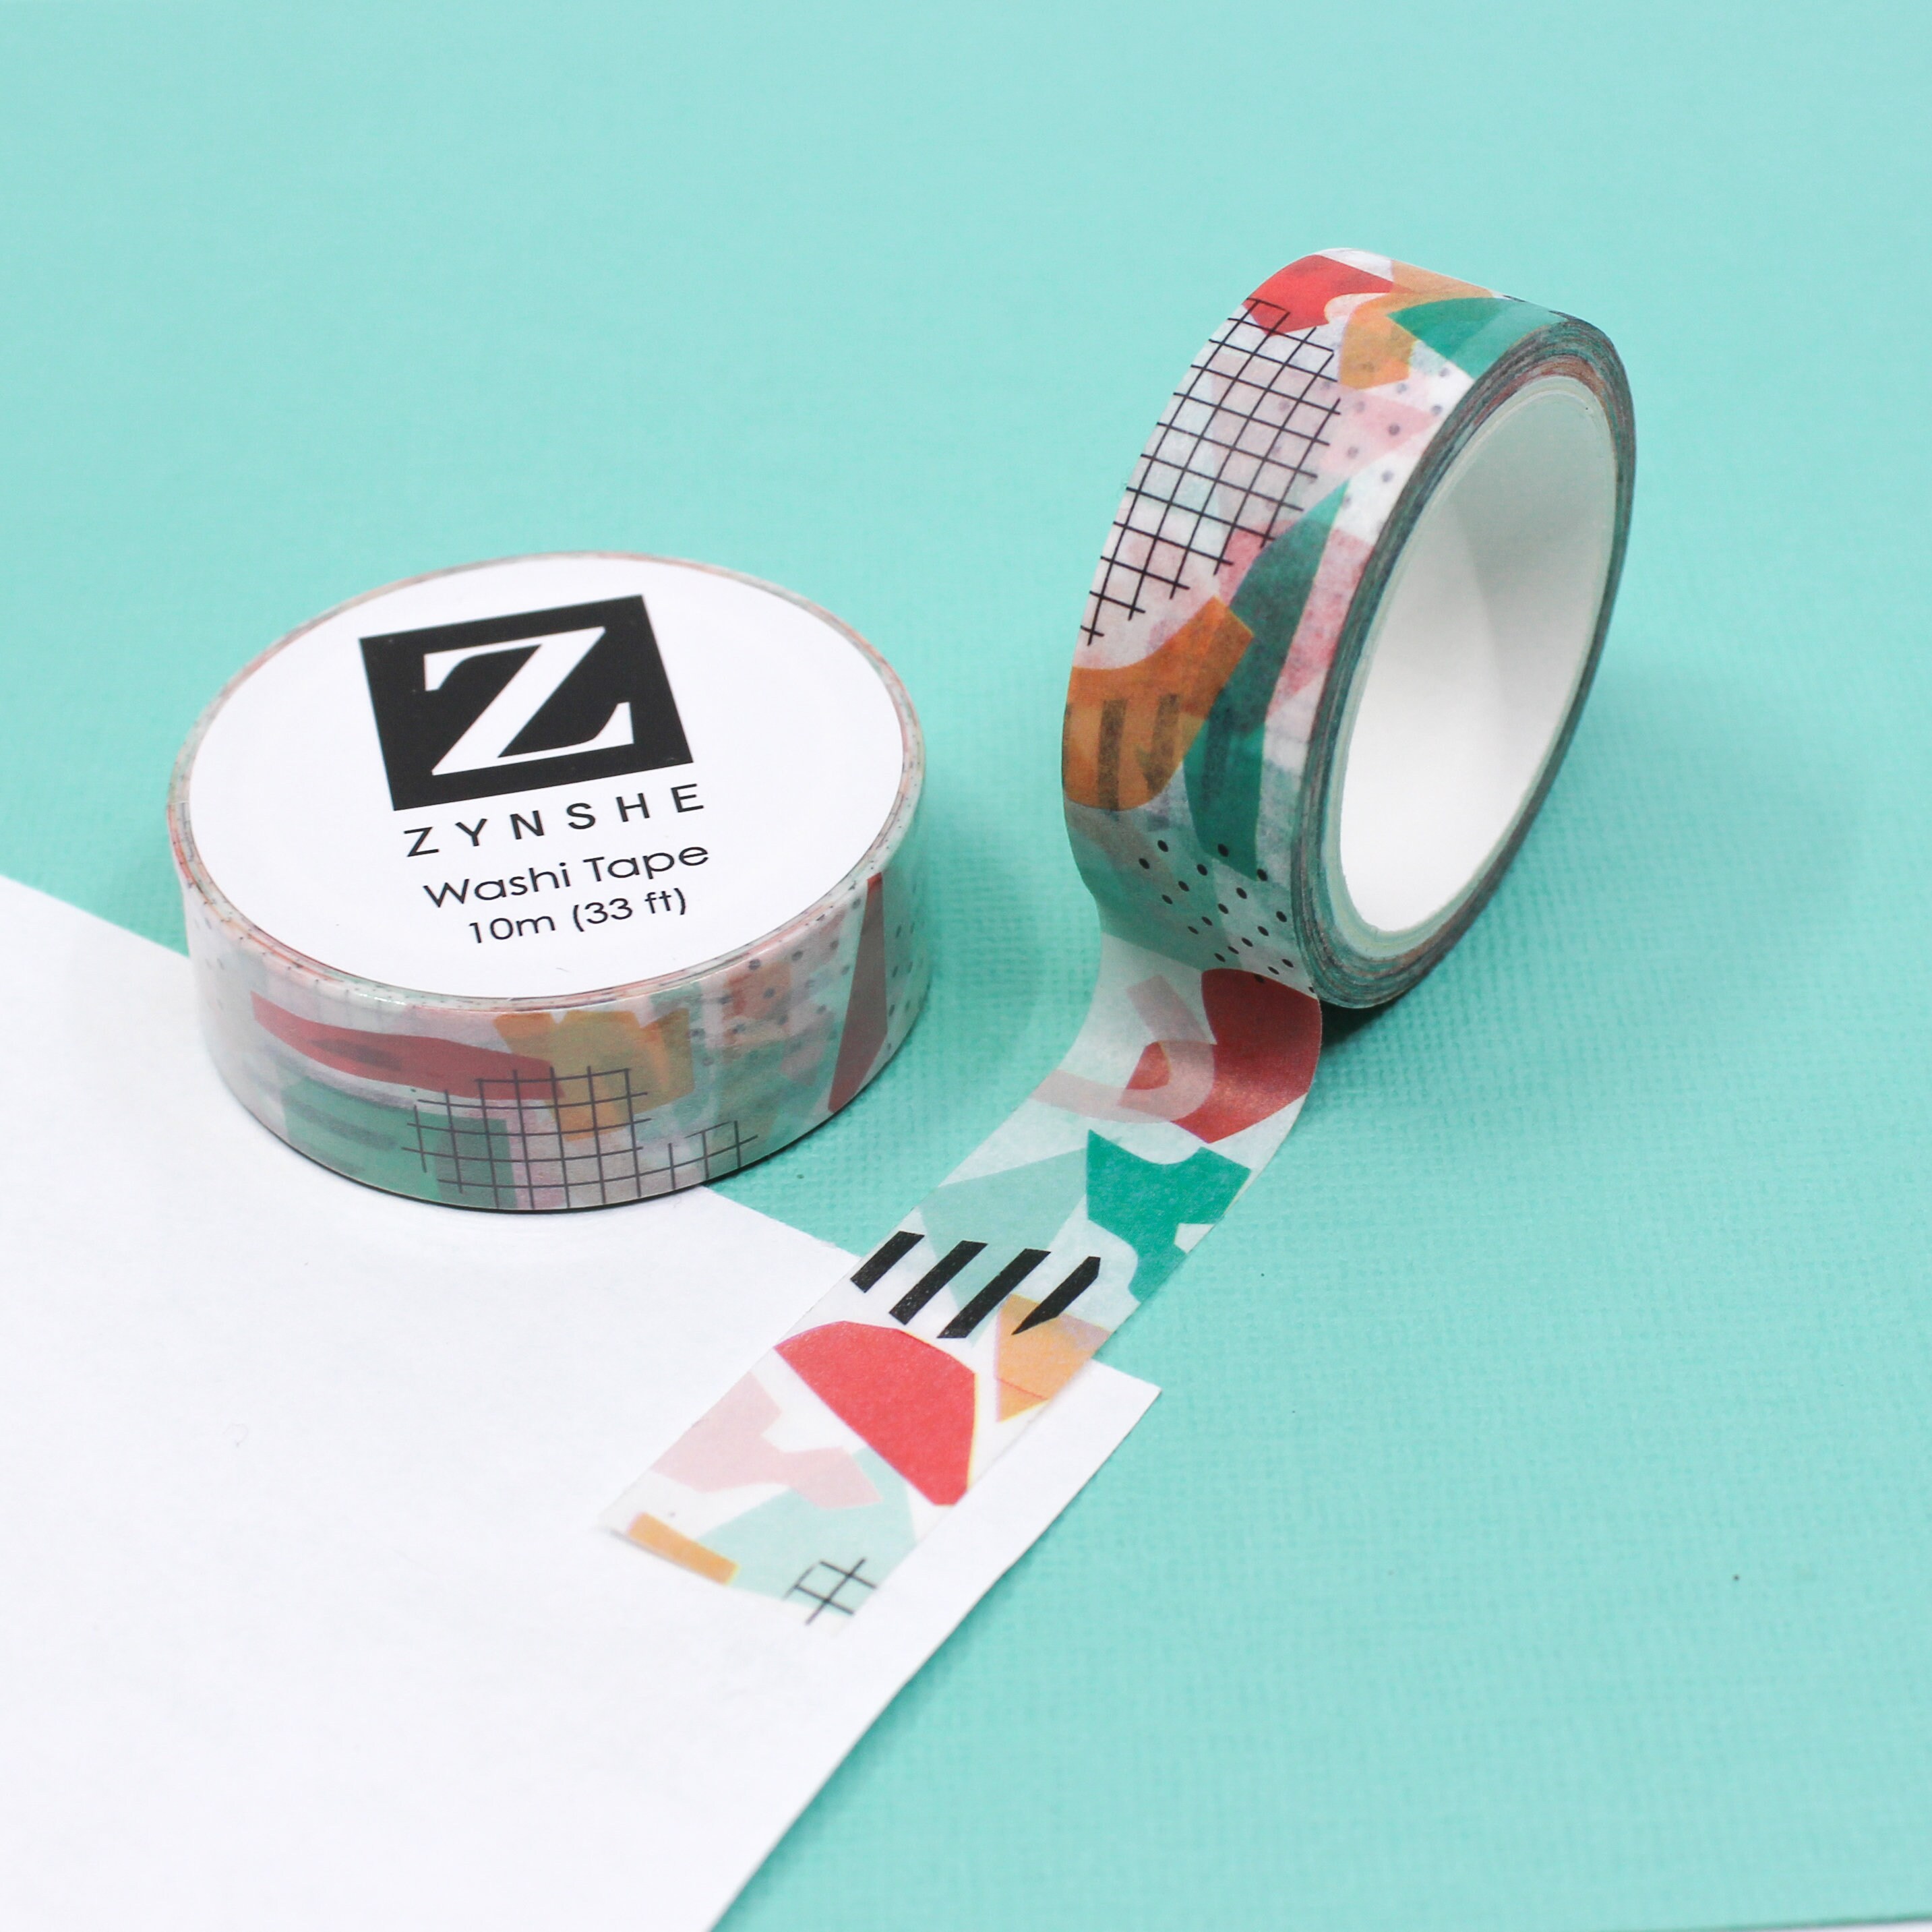 Multi Craft Foam Mounting Tape Pop Dot Tape Foam Adhesive Tape